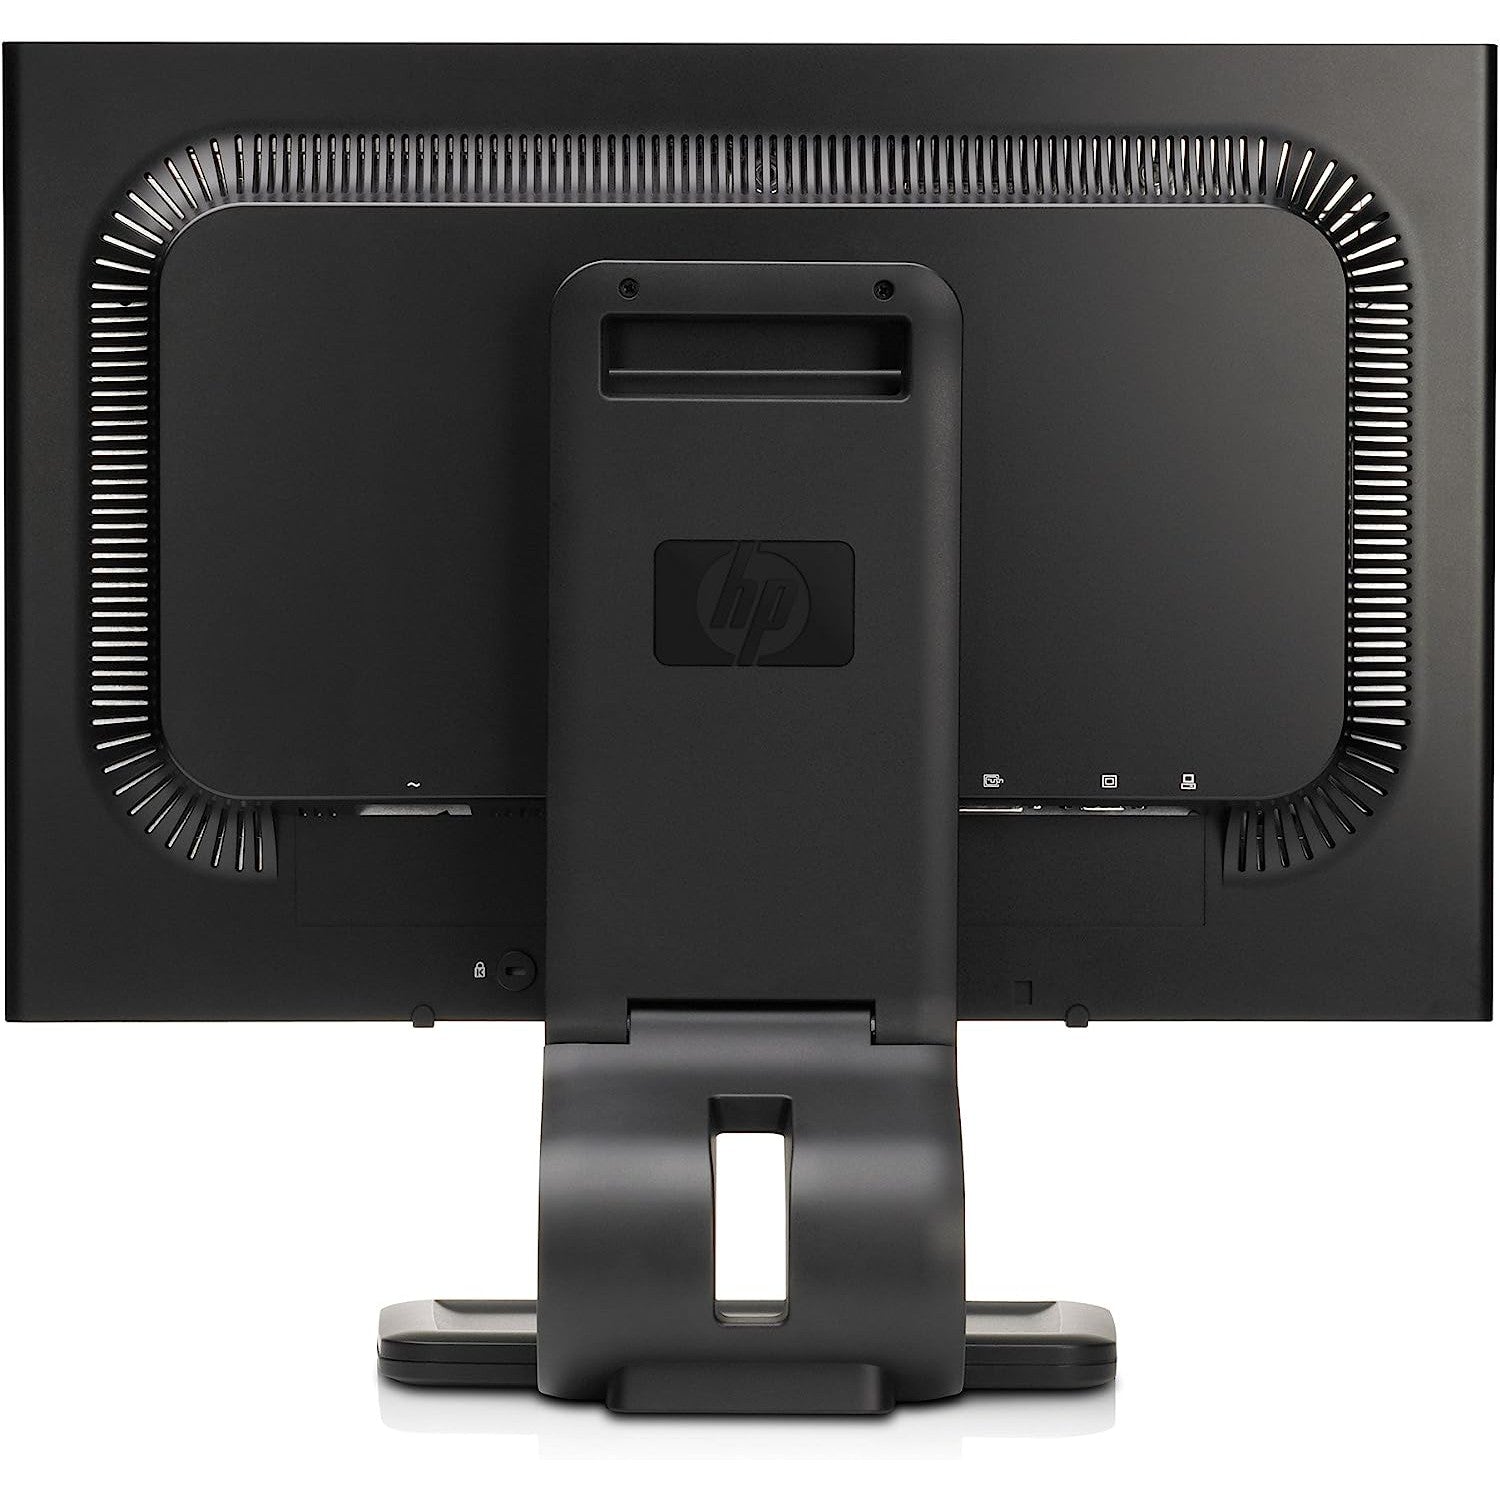 HP LA2405WG 24" Widescreen LCD Monitor - Black - Refurbished Excellent